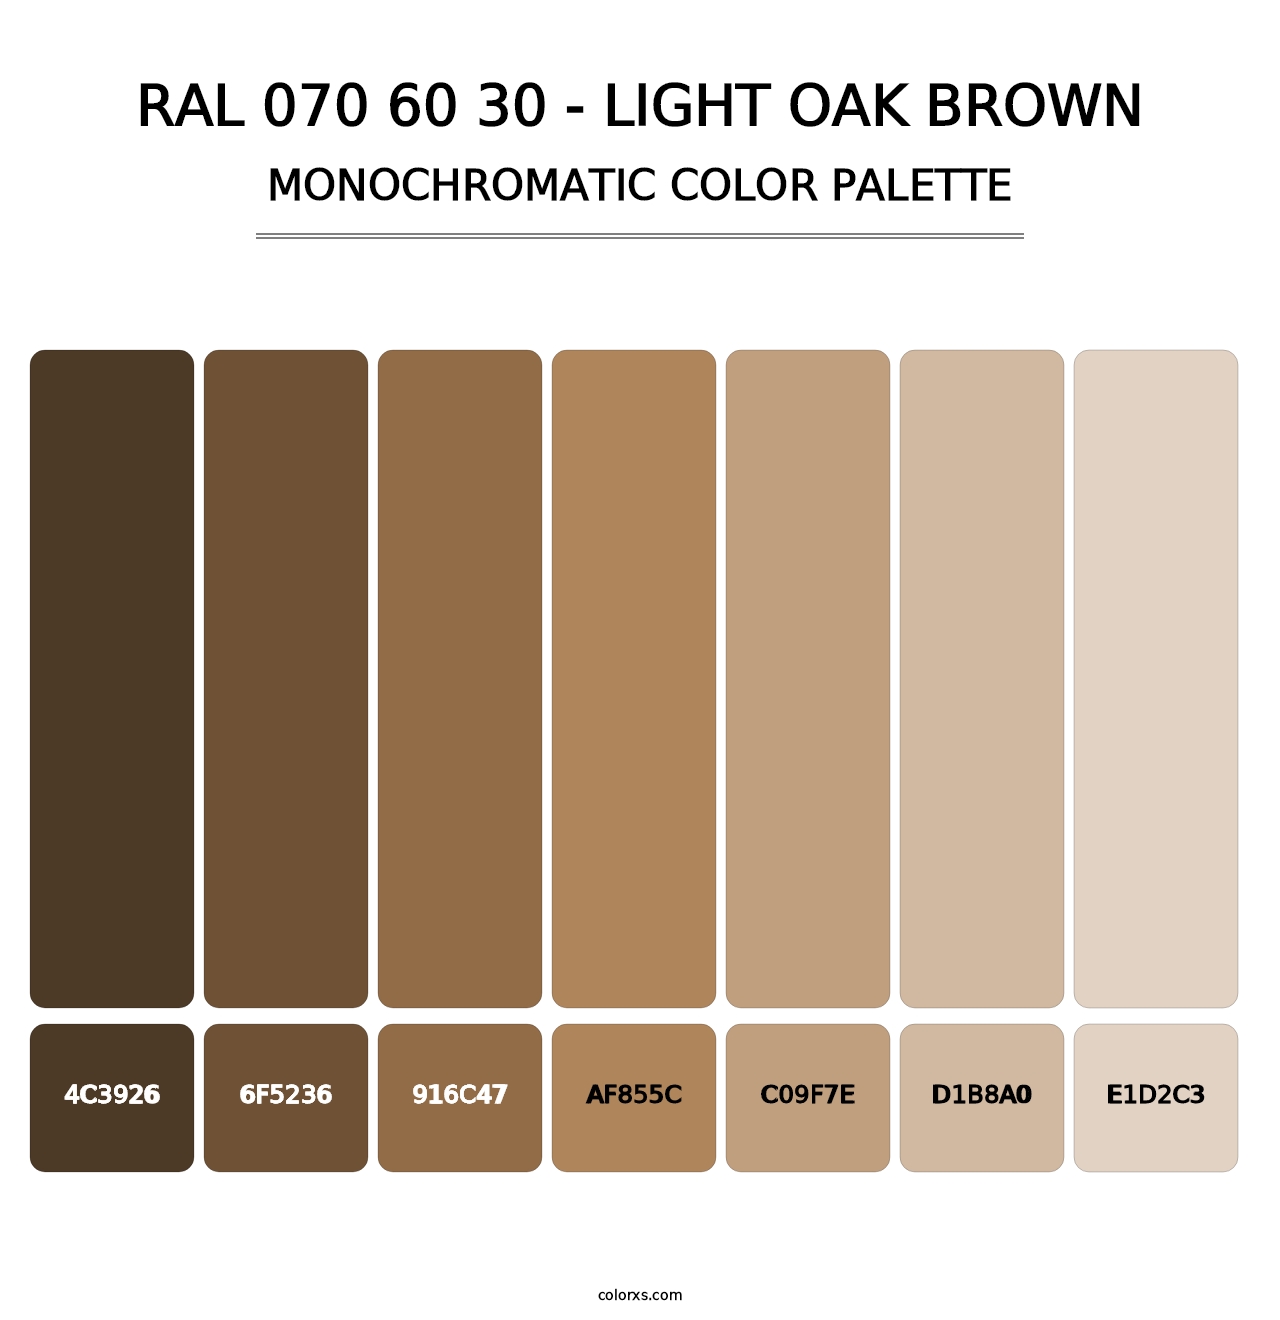 RAL 070 60 30 - Light Oak Brown - Monochromatic Color Palette